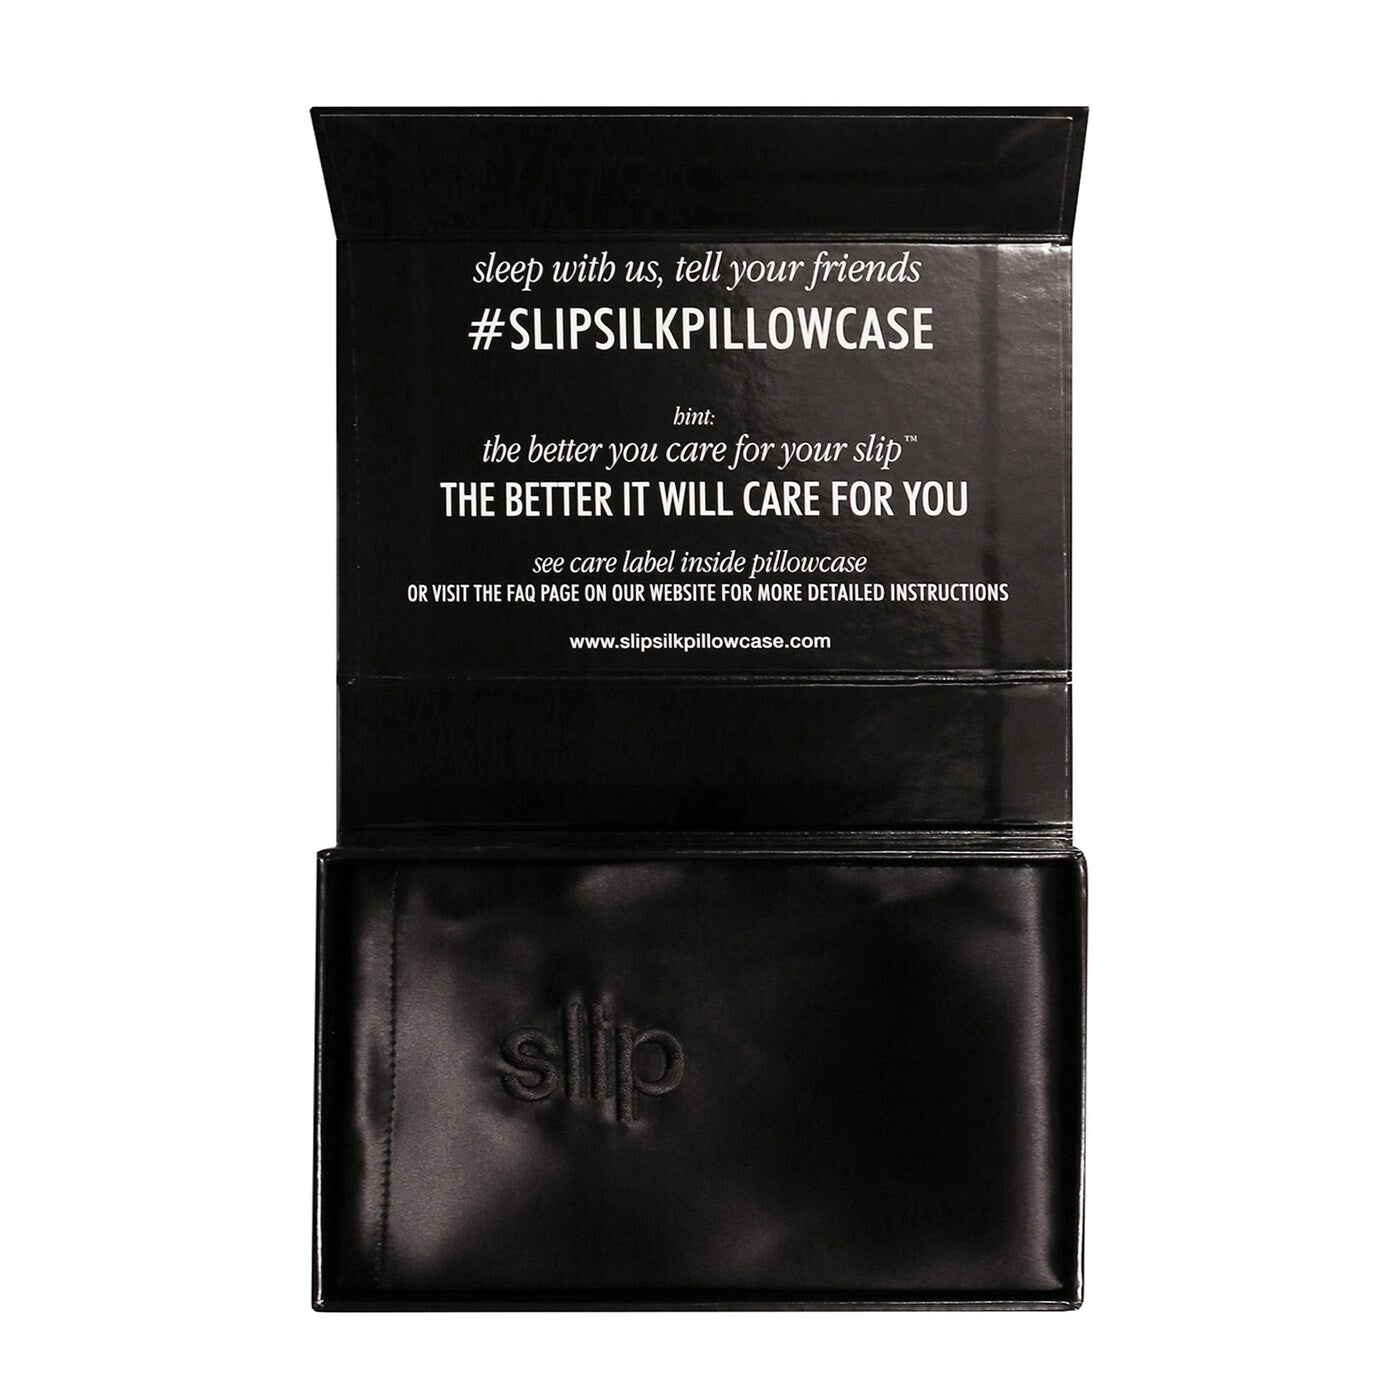 Slip Pure silk pillowcase - King - black